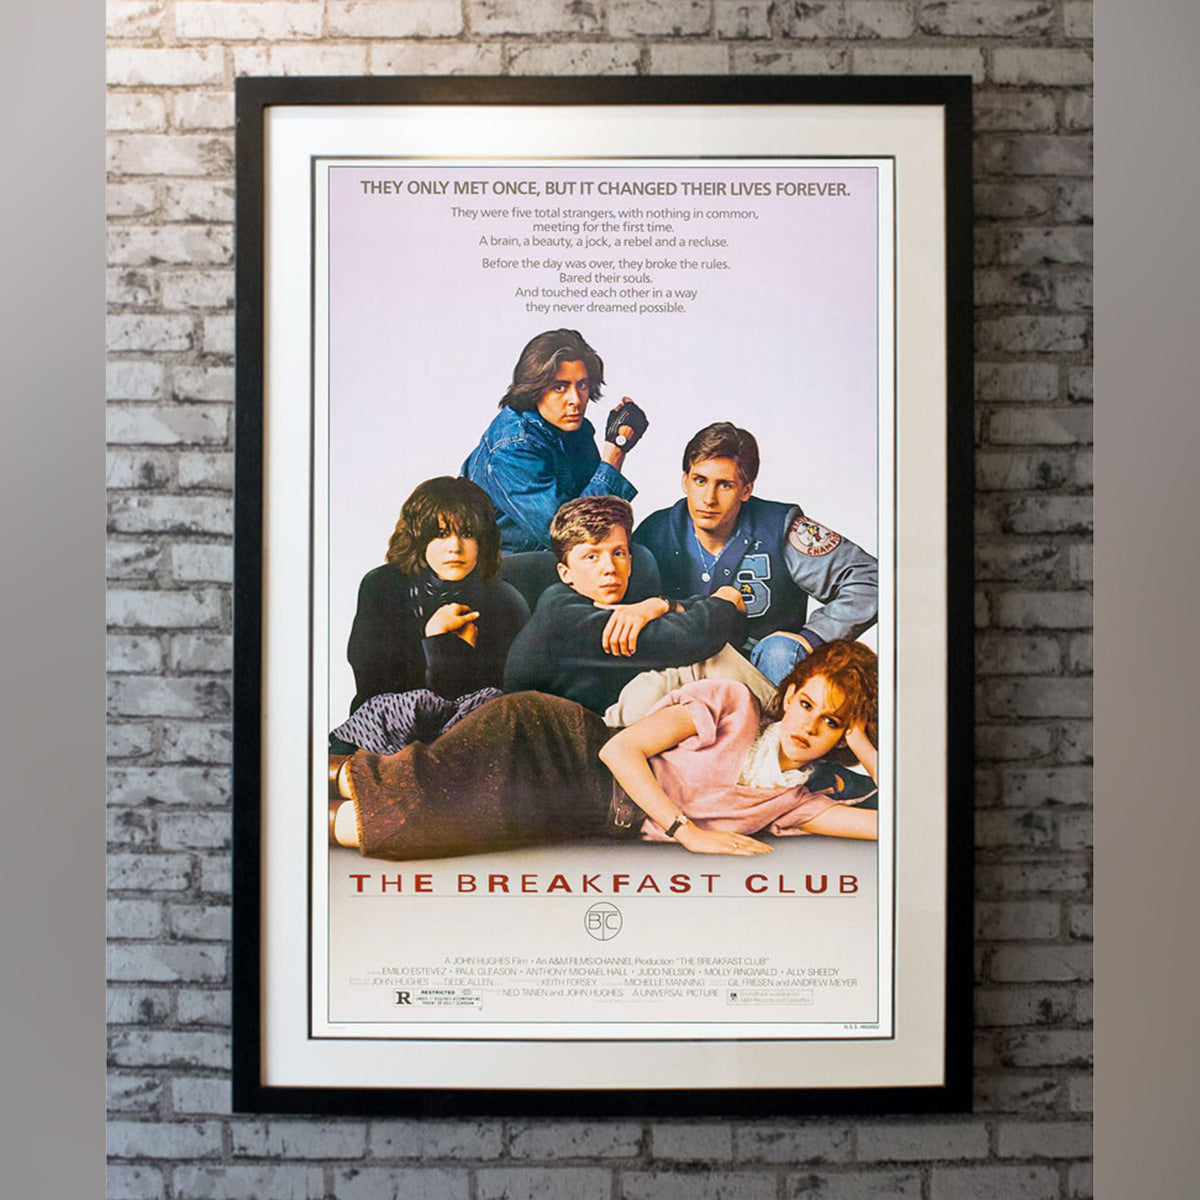 Original Movie Poster of Breakfast Club, The (1985)